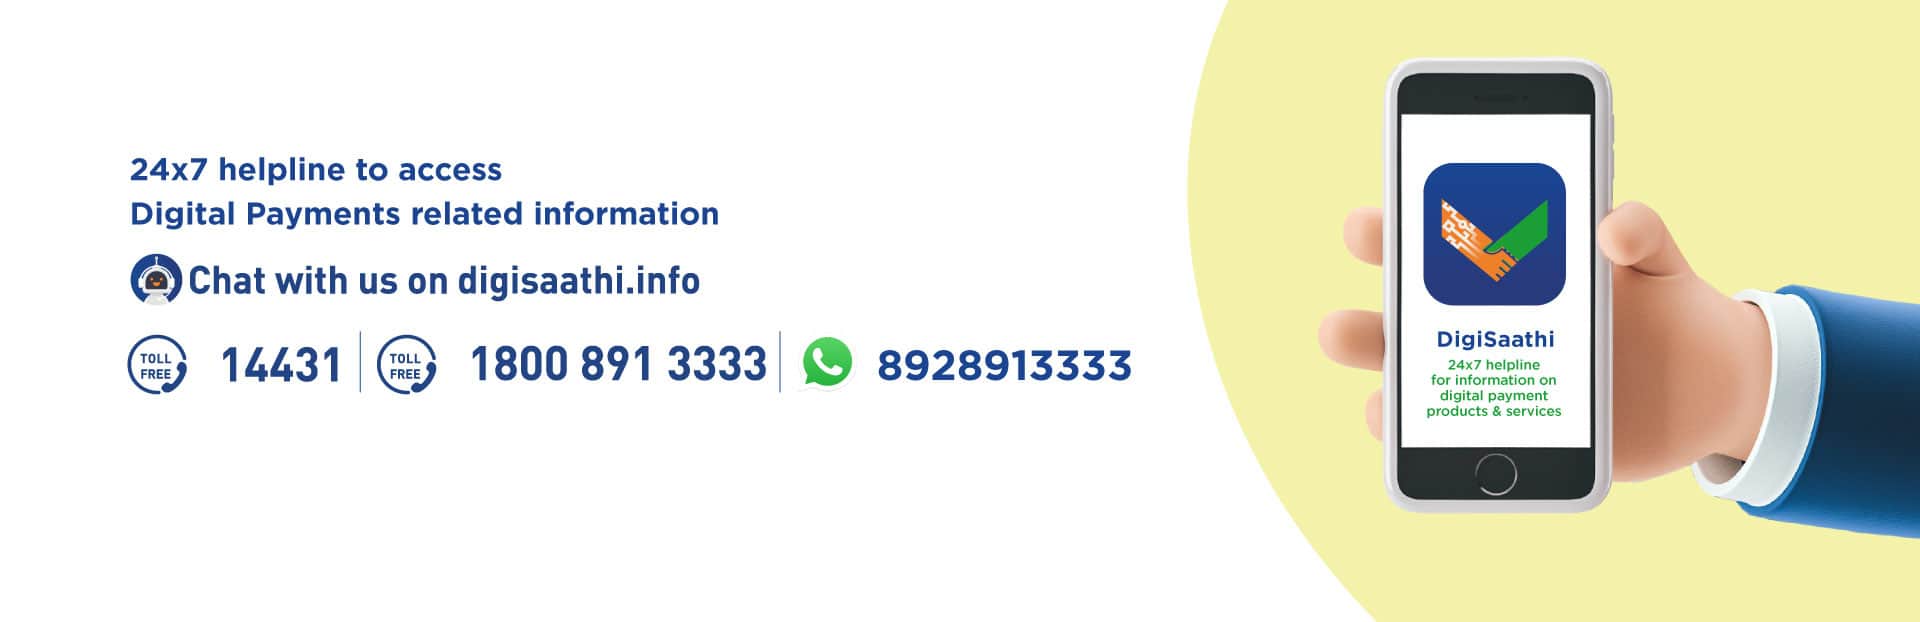 National Payments Corporation of India (NPCI) - Enabling digital ...